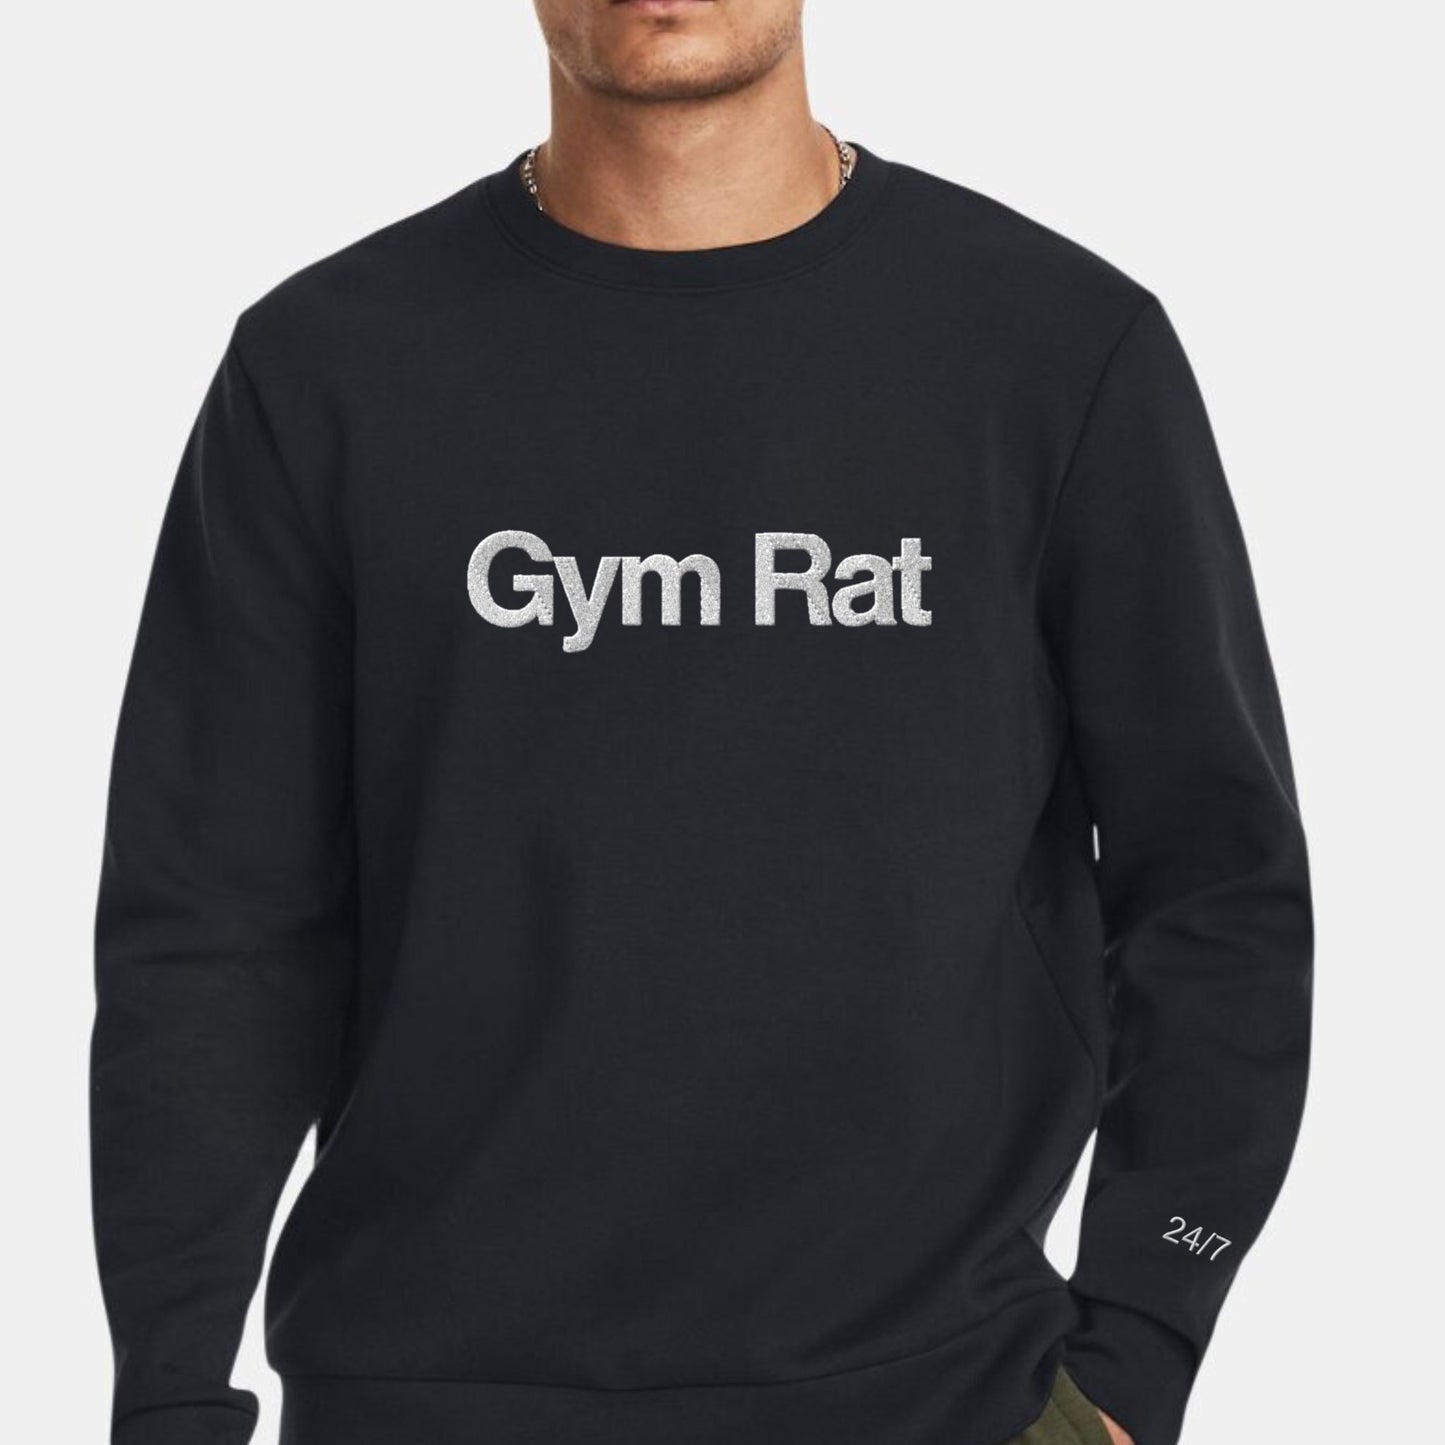 Personalized Gym Rat Sweatshirt